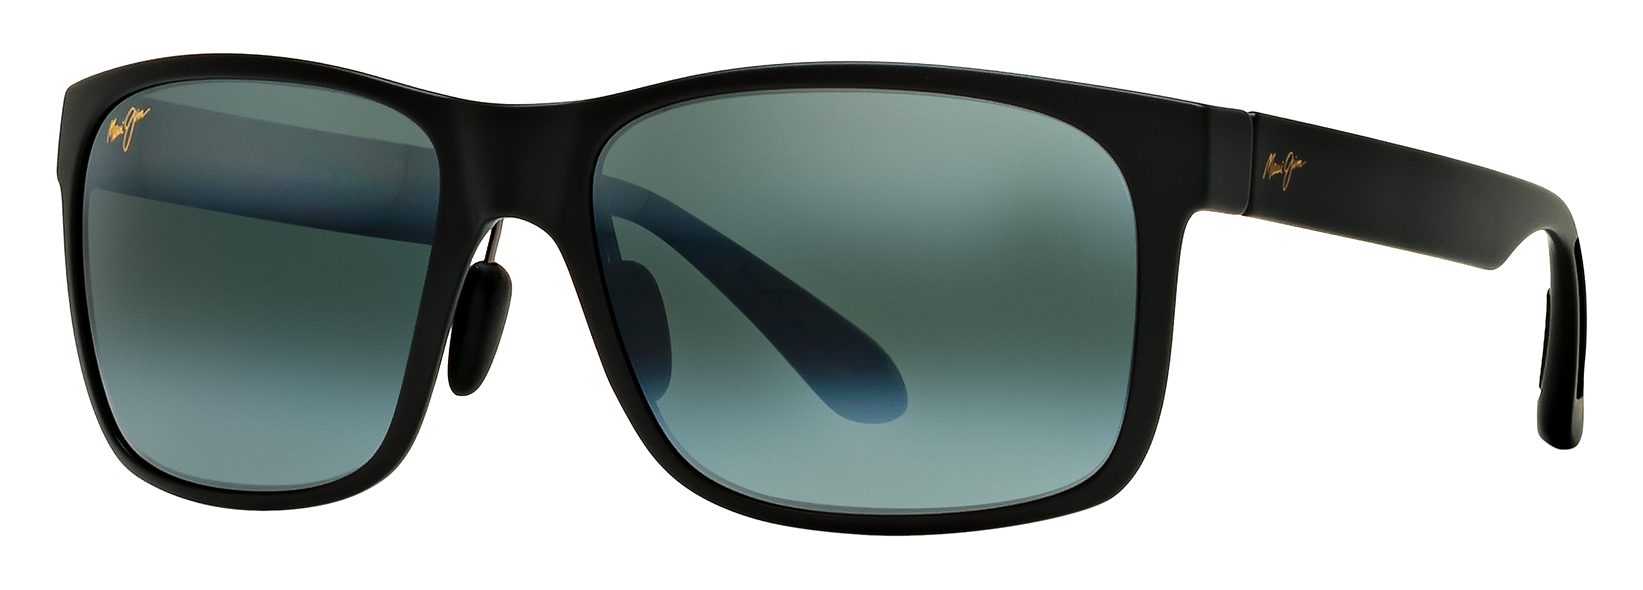 Maui Jim Red Sands Polarized Sunglasses | Bass Pro Shops